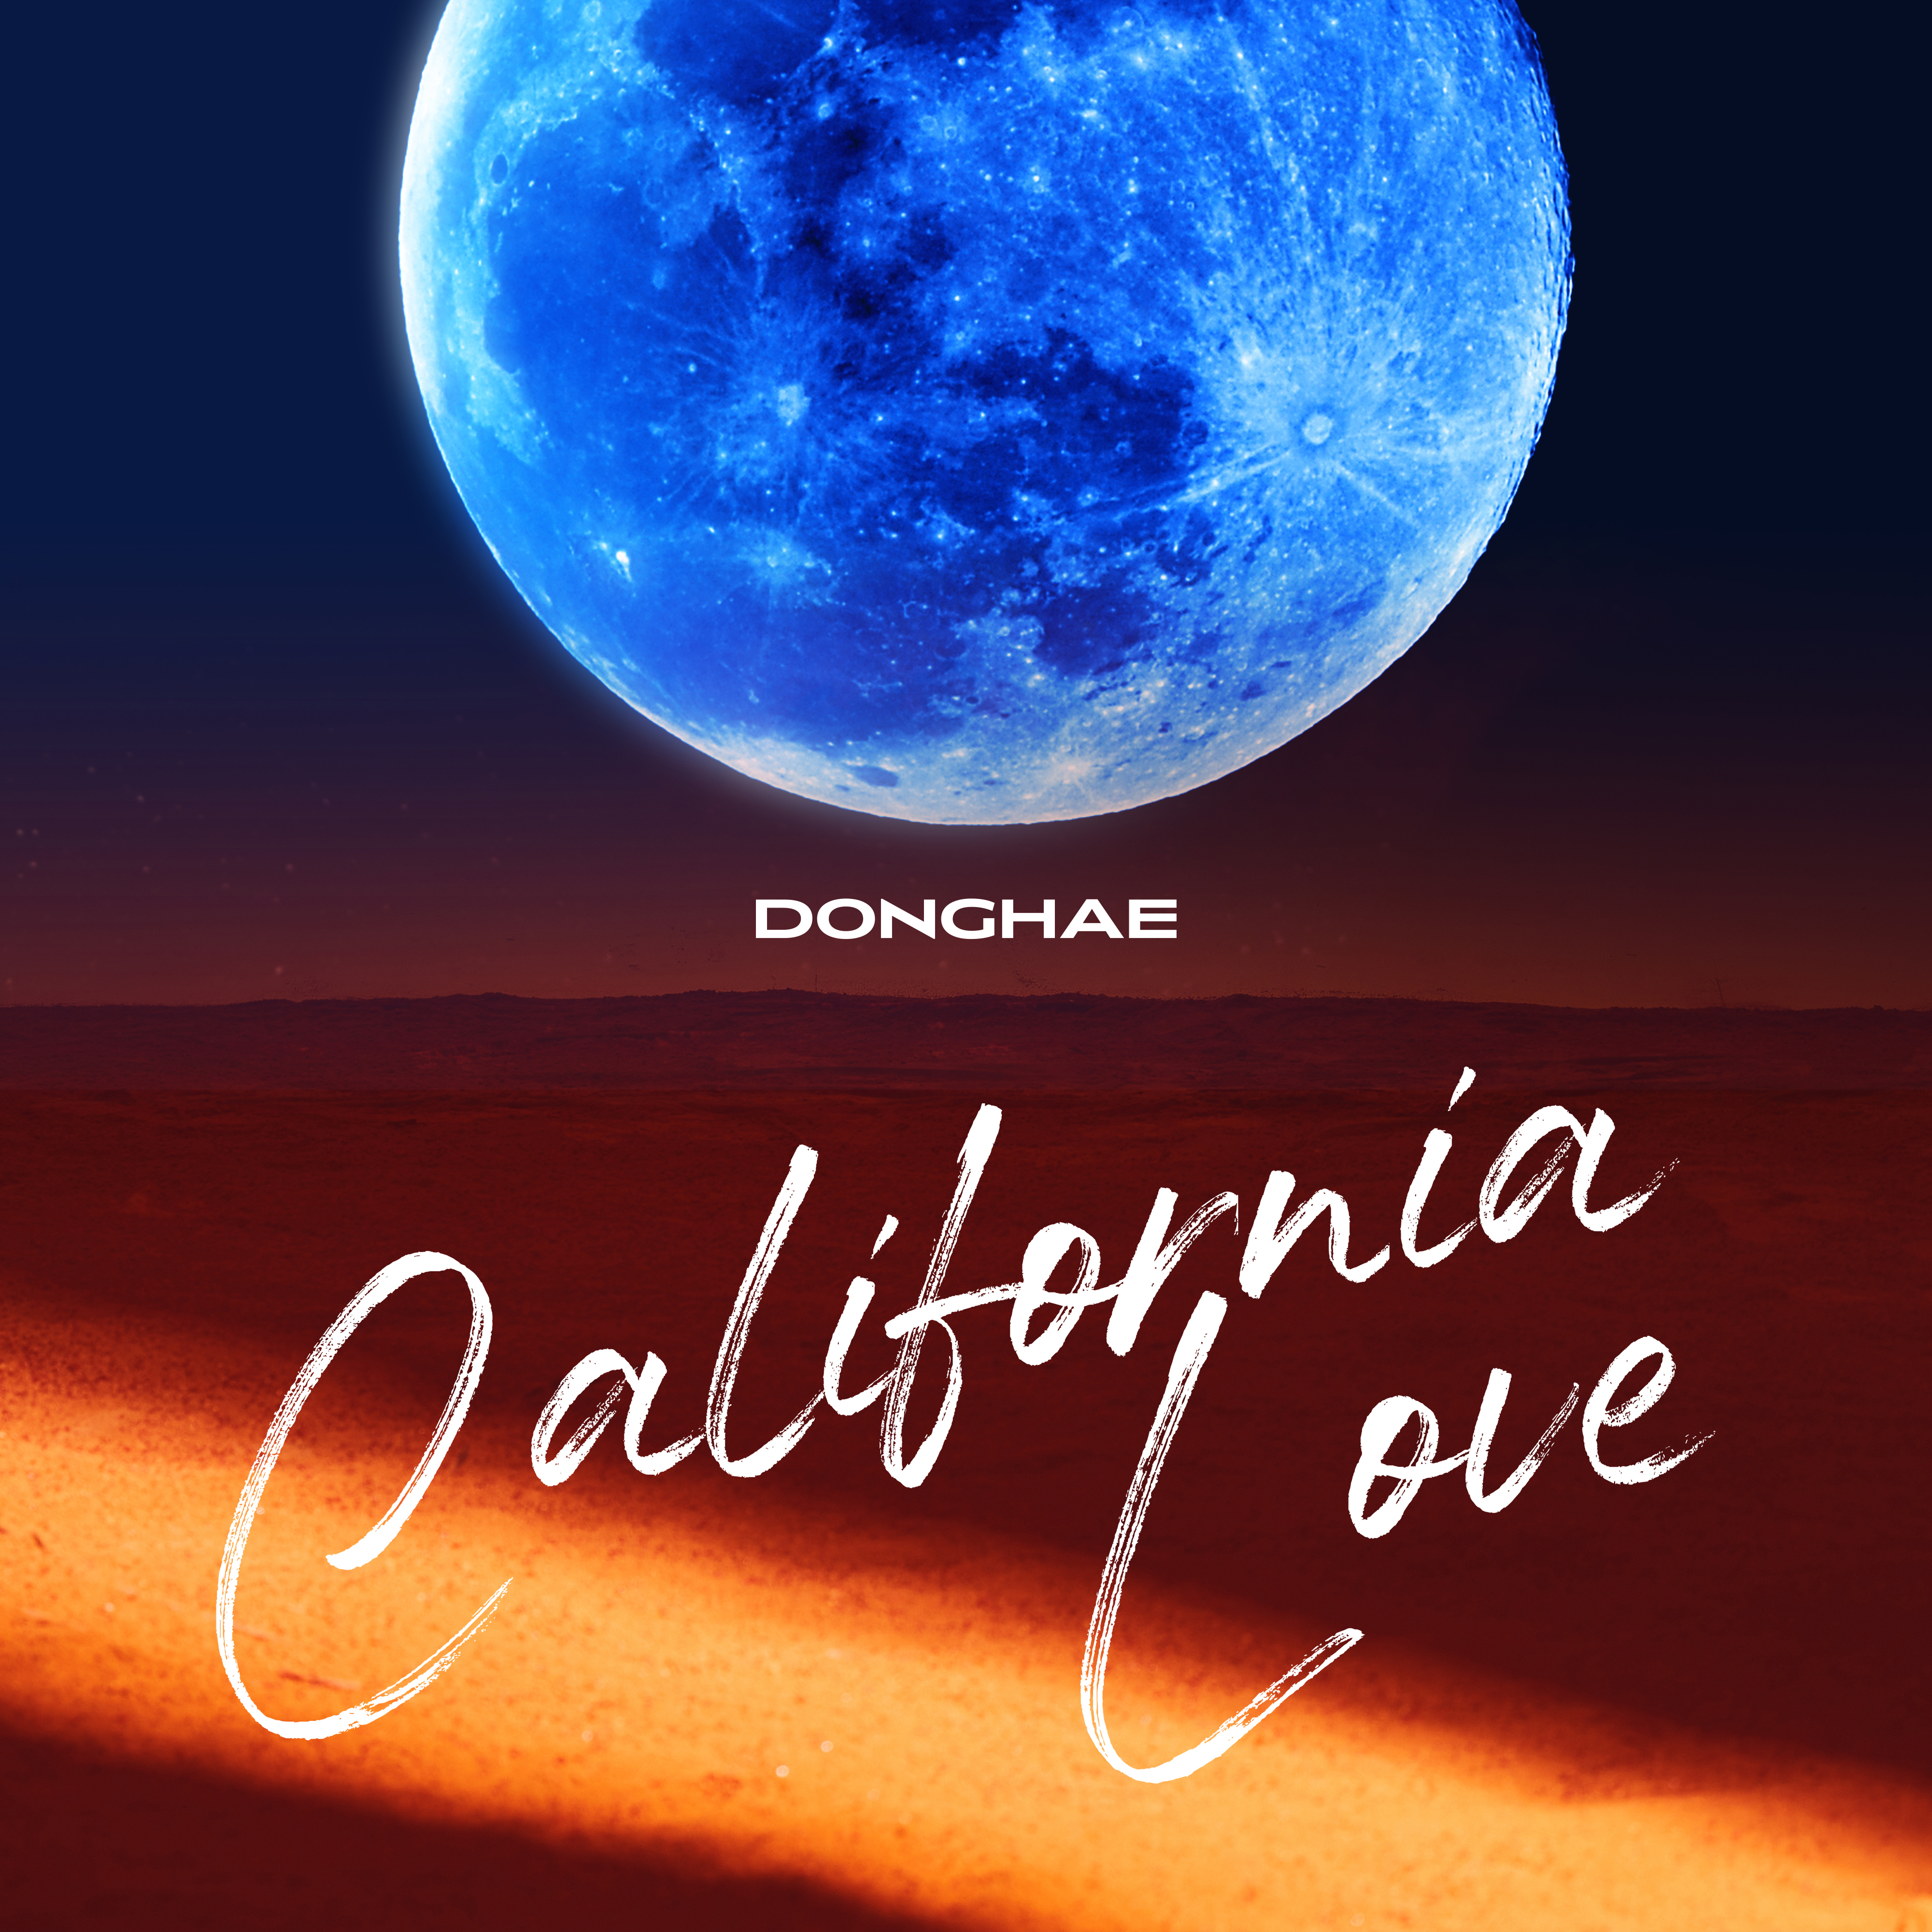 [影音] 東海(SJ) - California Love